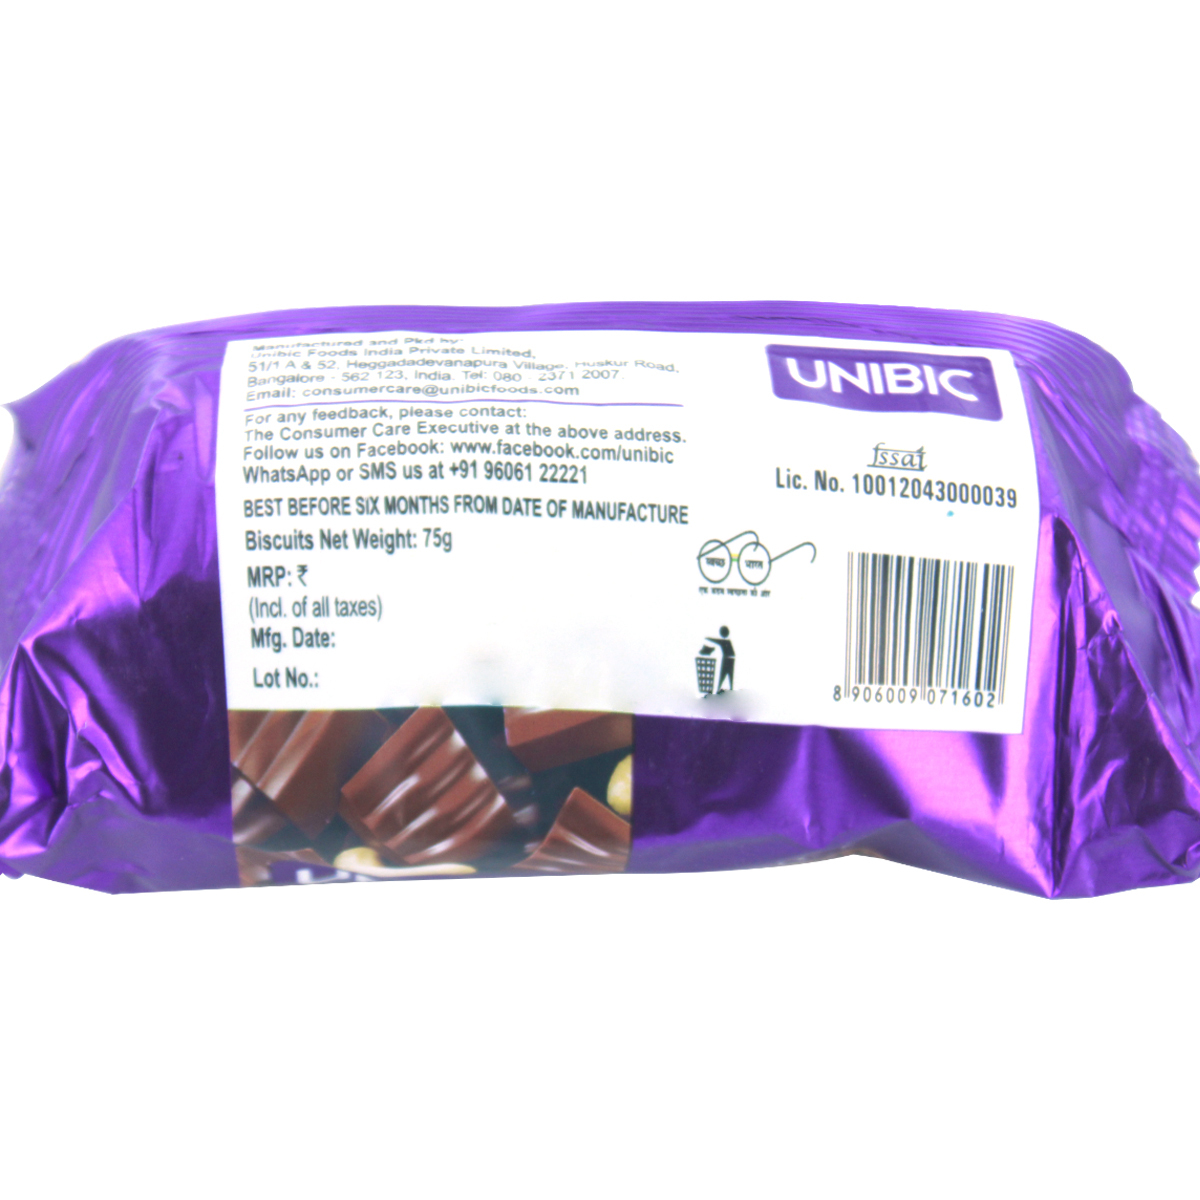 Unibic Choco Nut Cookies 75g